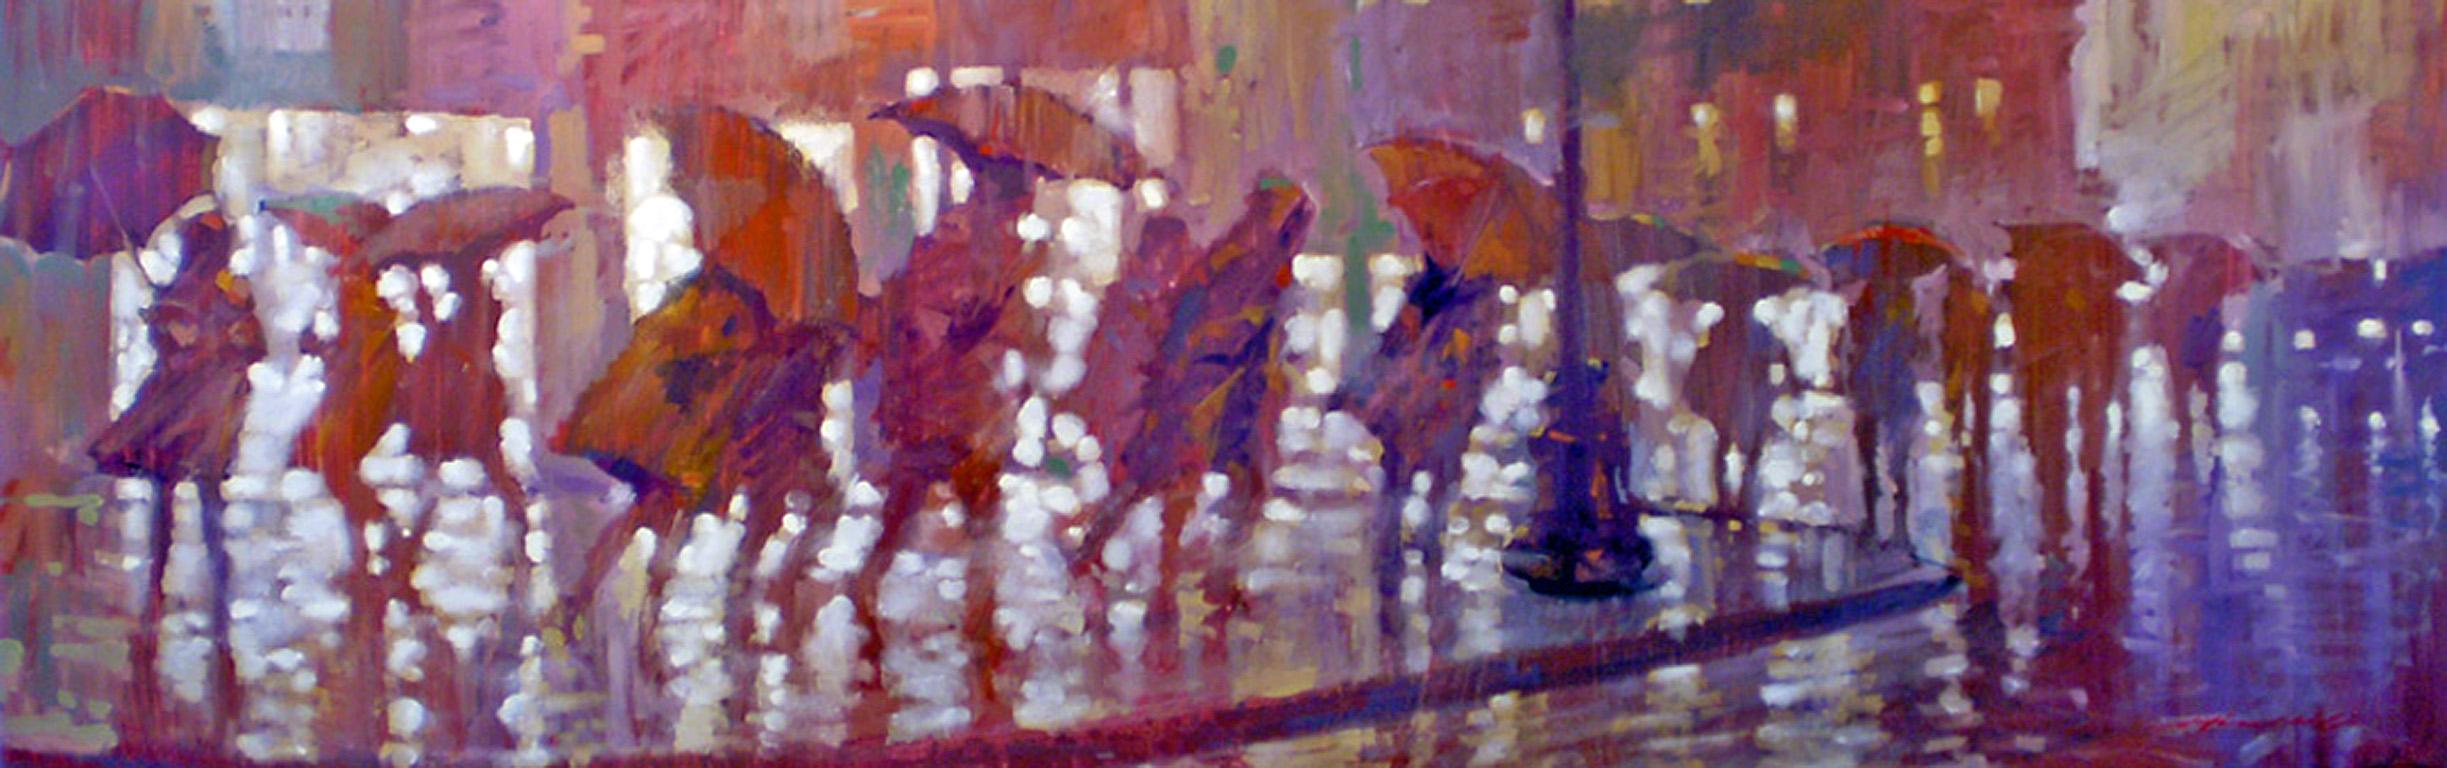 David Hinchliffe Figurative Painting - Umbrella Parade (Summer Shower) - contemporary impressionism figures umbrellas